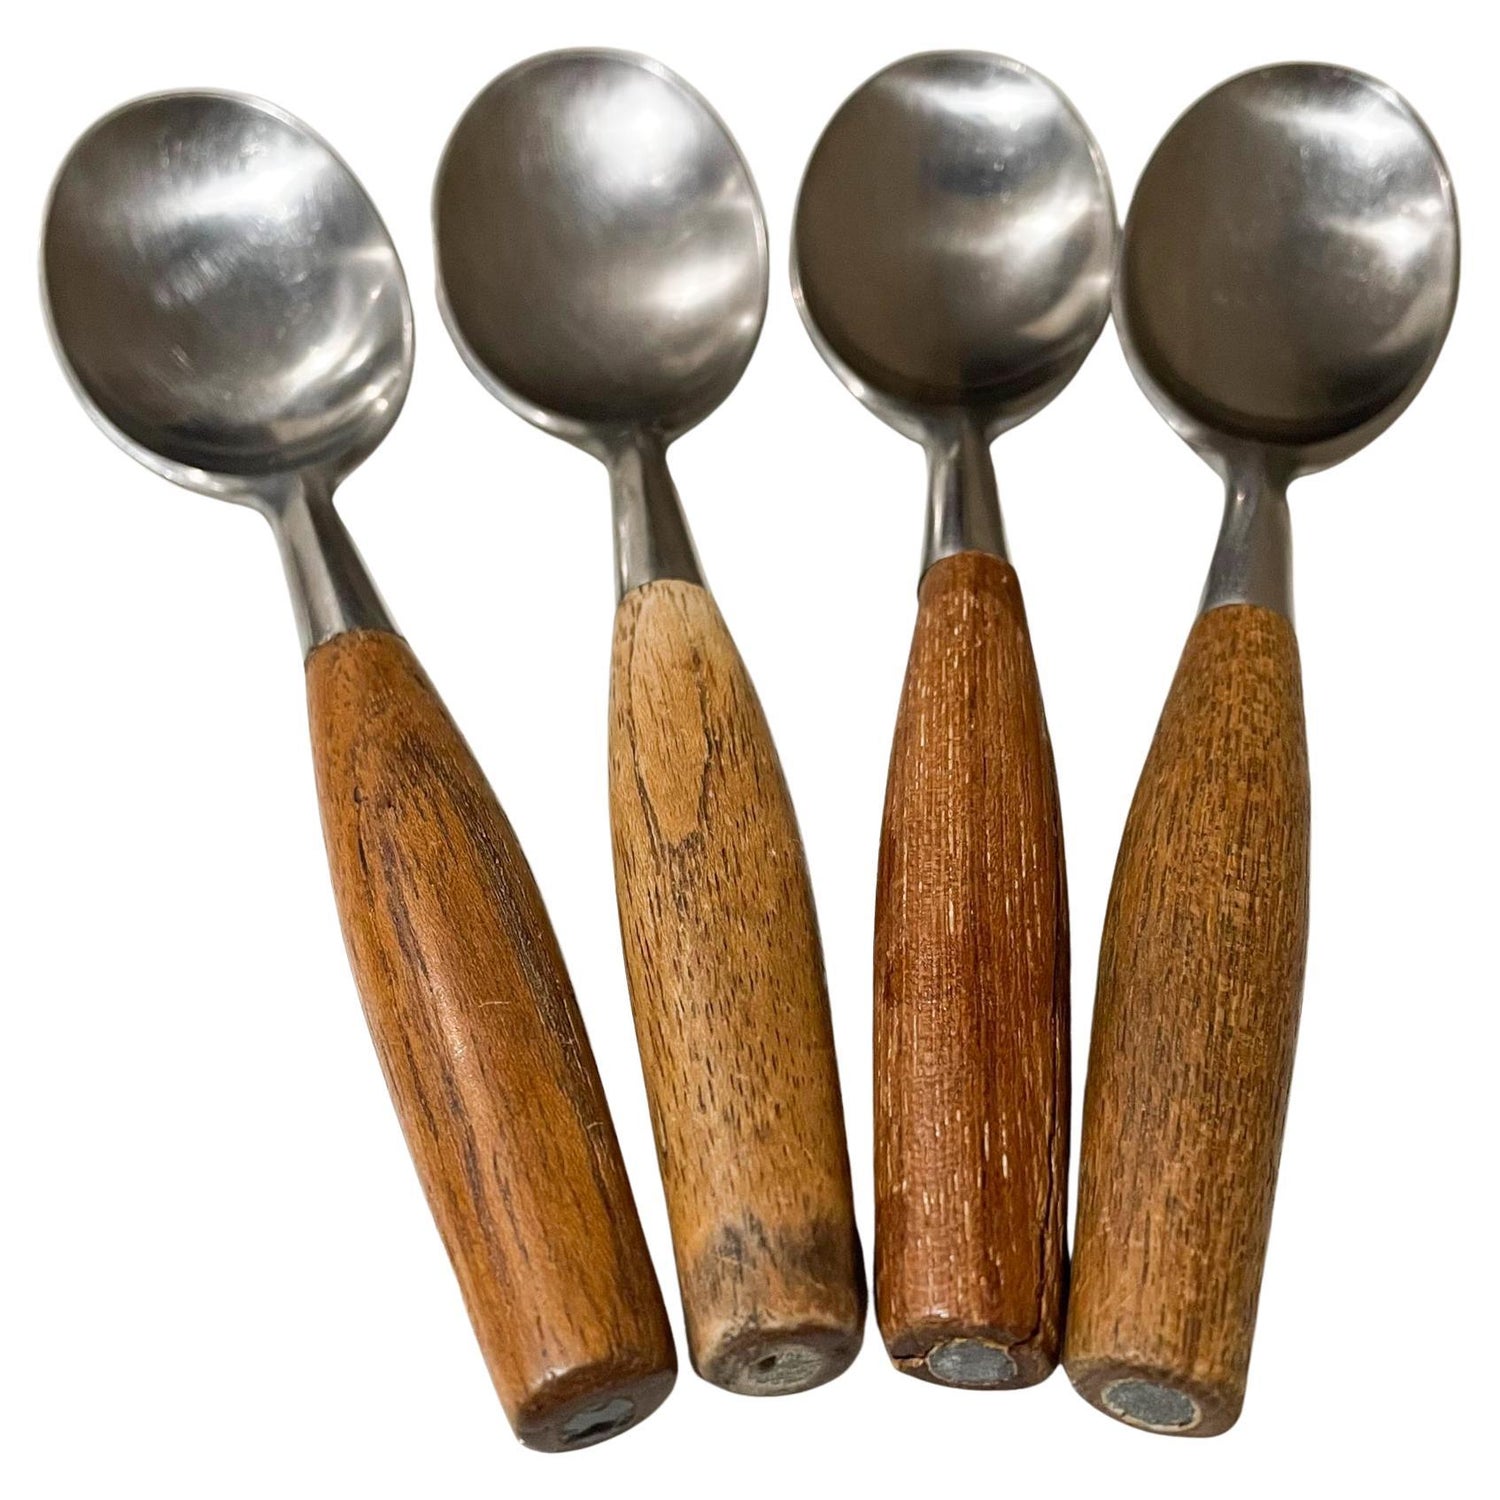 Vintage Antique Worn Silver Aluminum Tin Tasting Ice Cream Spoons Assorted Lot of 14